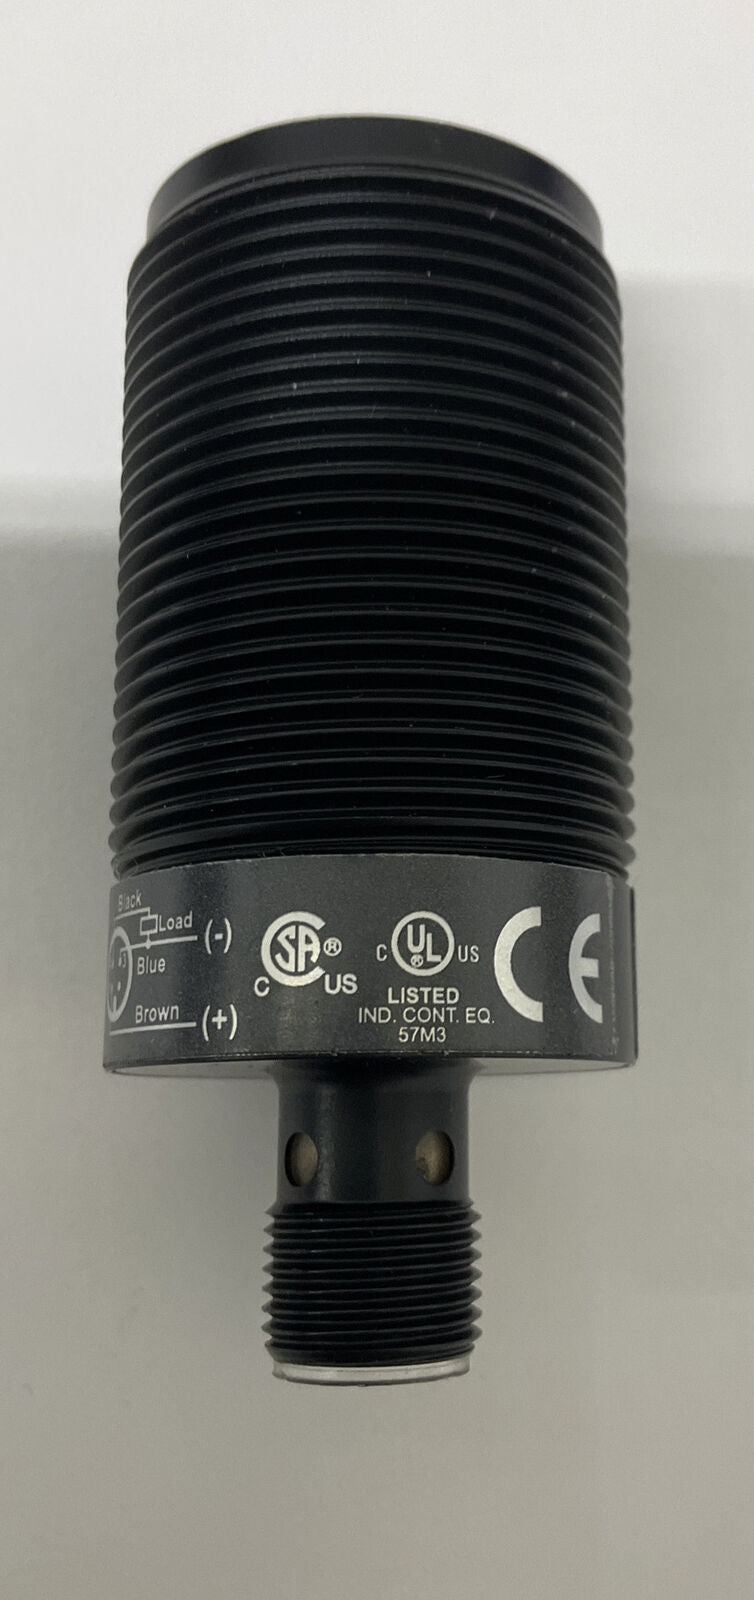 Pepperl - Fuchs NMB15-30GM65-E2-C-V1 / 911273 Proximity Sensor (GR108)